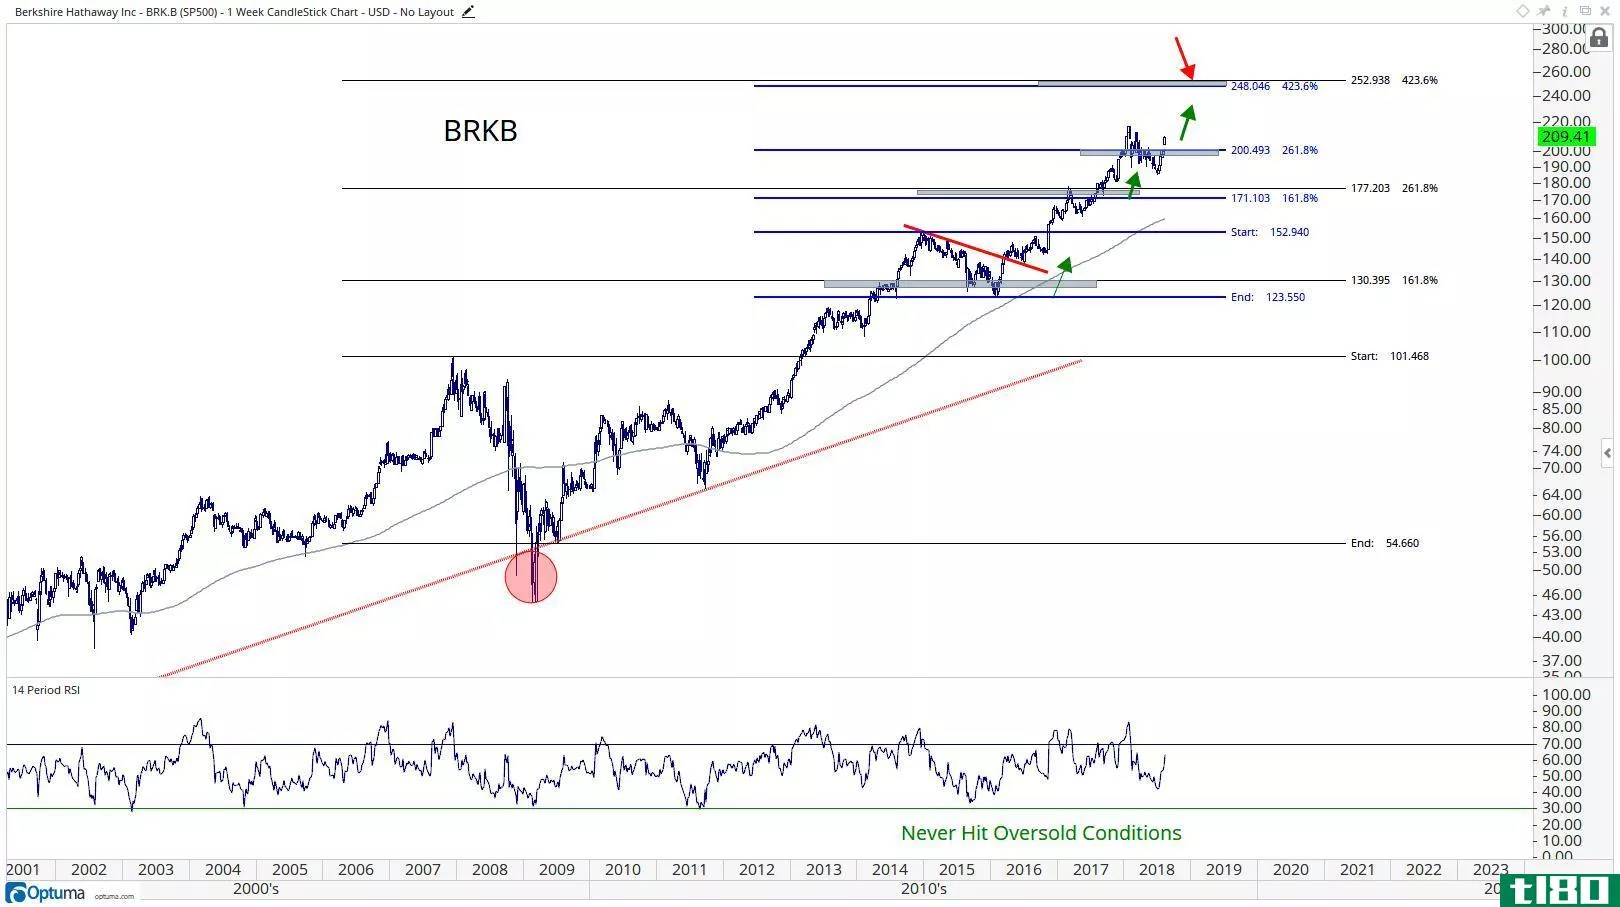 Longer-term technical chart showing the unptrend in Berkshire Hathaway Inc. (BRK.B) stock